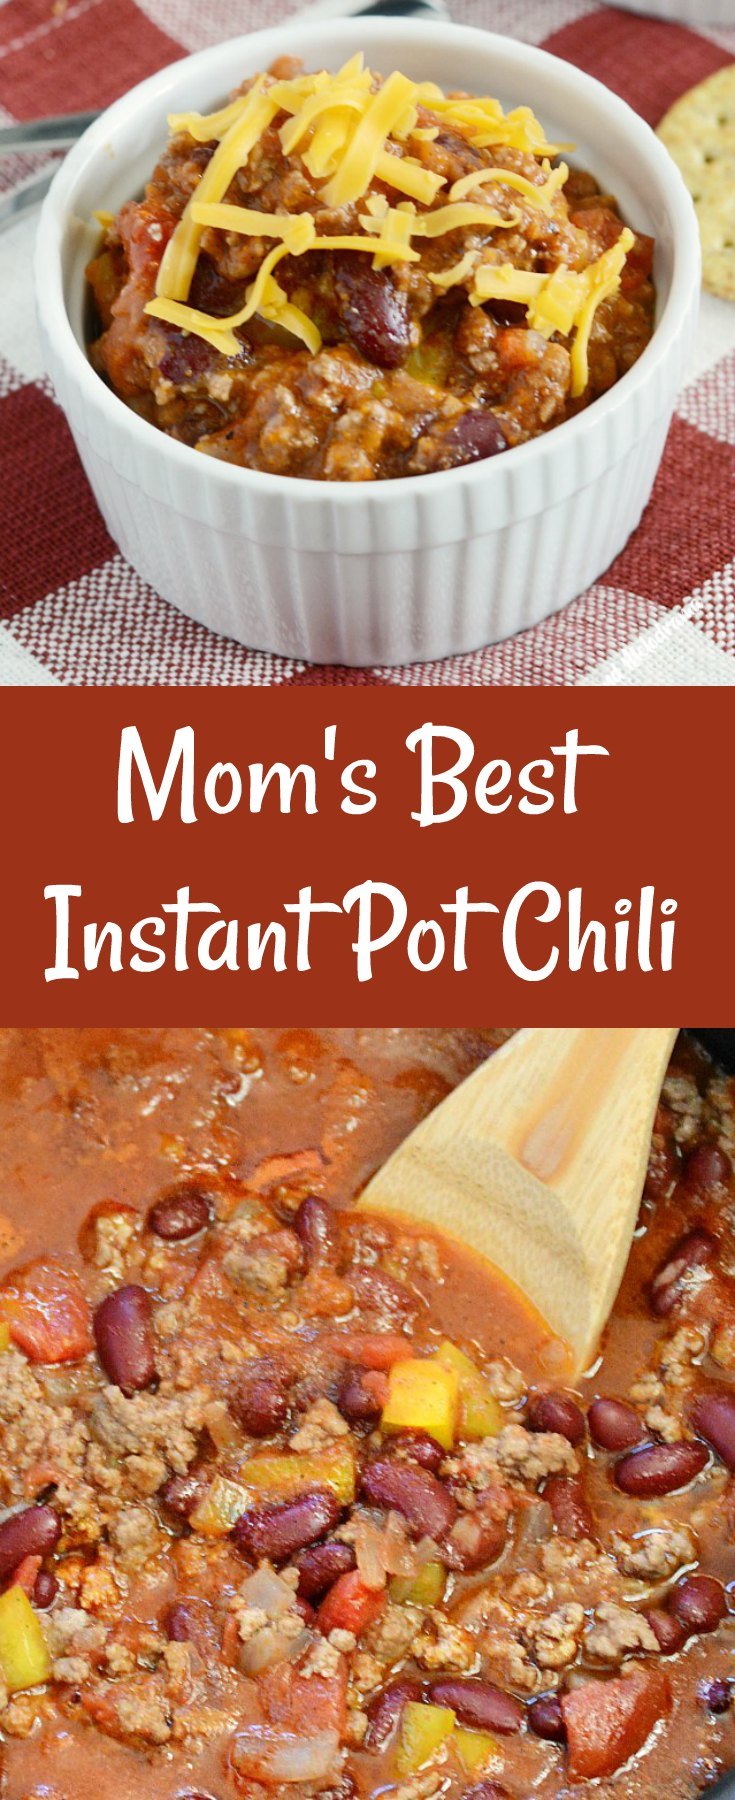 https://www.meatloafandmelodrama.com/wp-content/uploads/2018/01/Moms-Best-Instant-Pot-Chili-Recipe.jpg